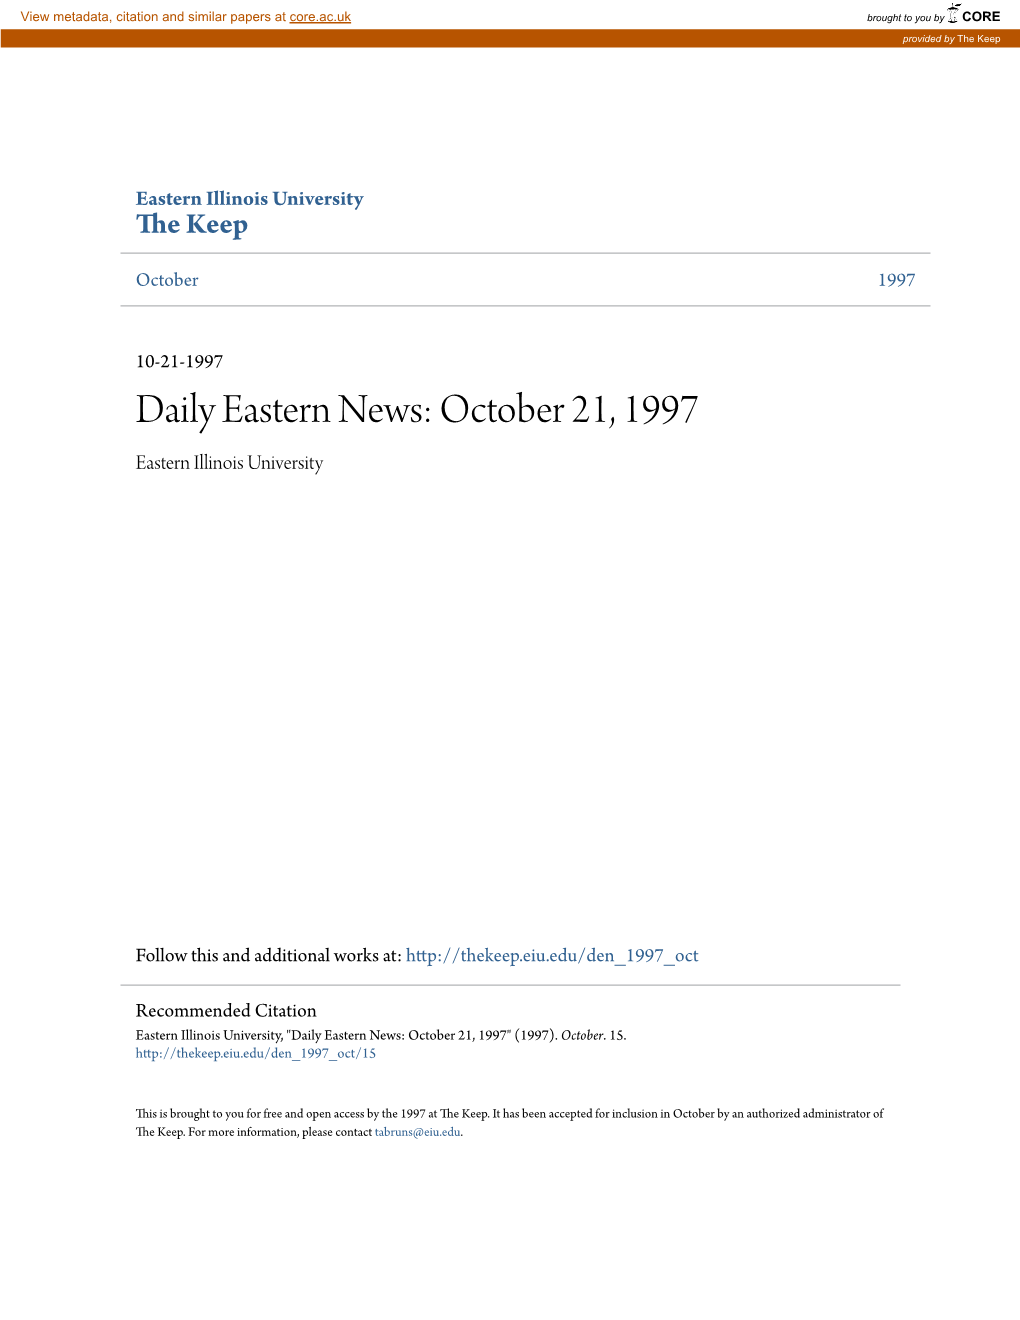 Daily Eastern News: October 21, 1997 Eastern Illinois University